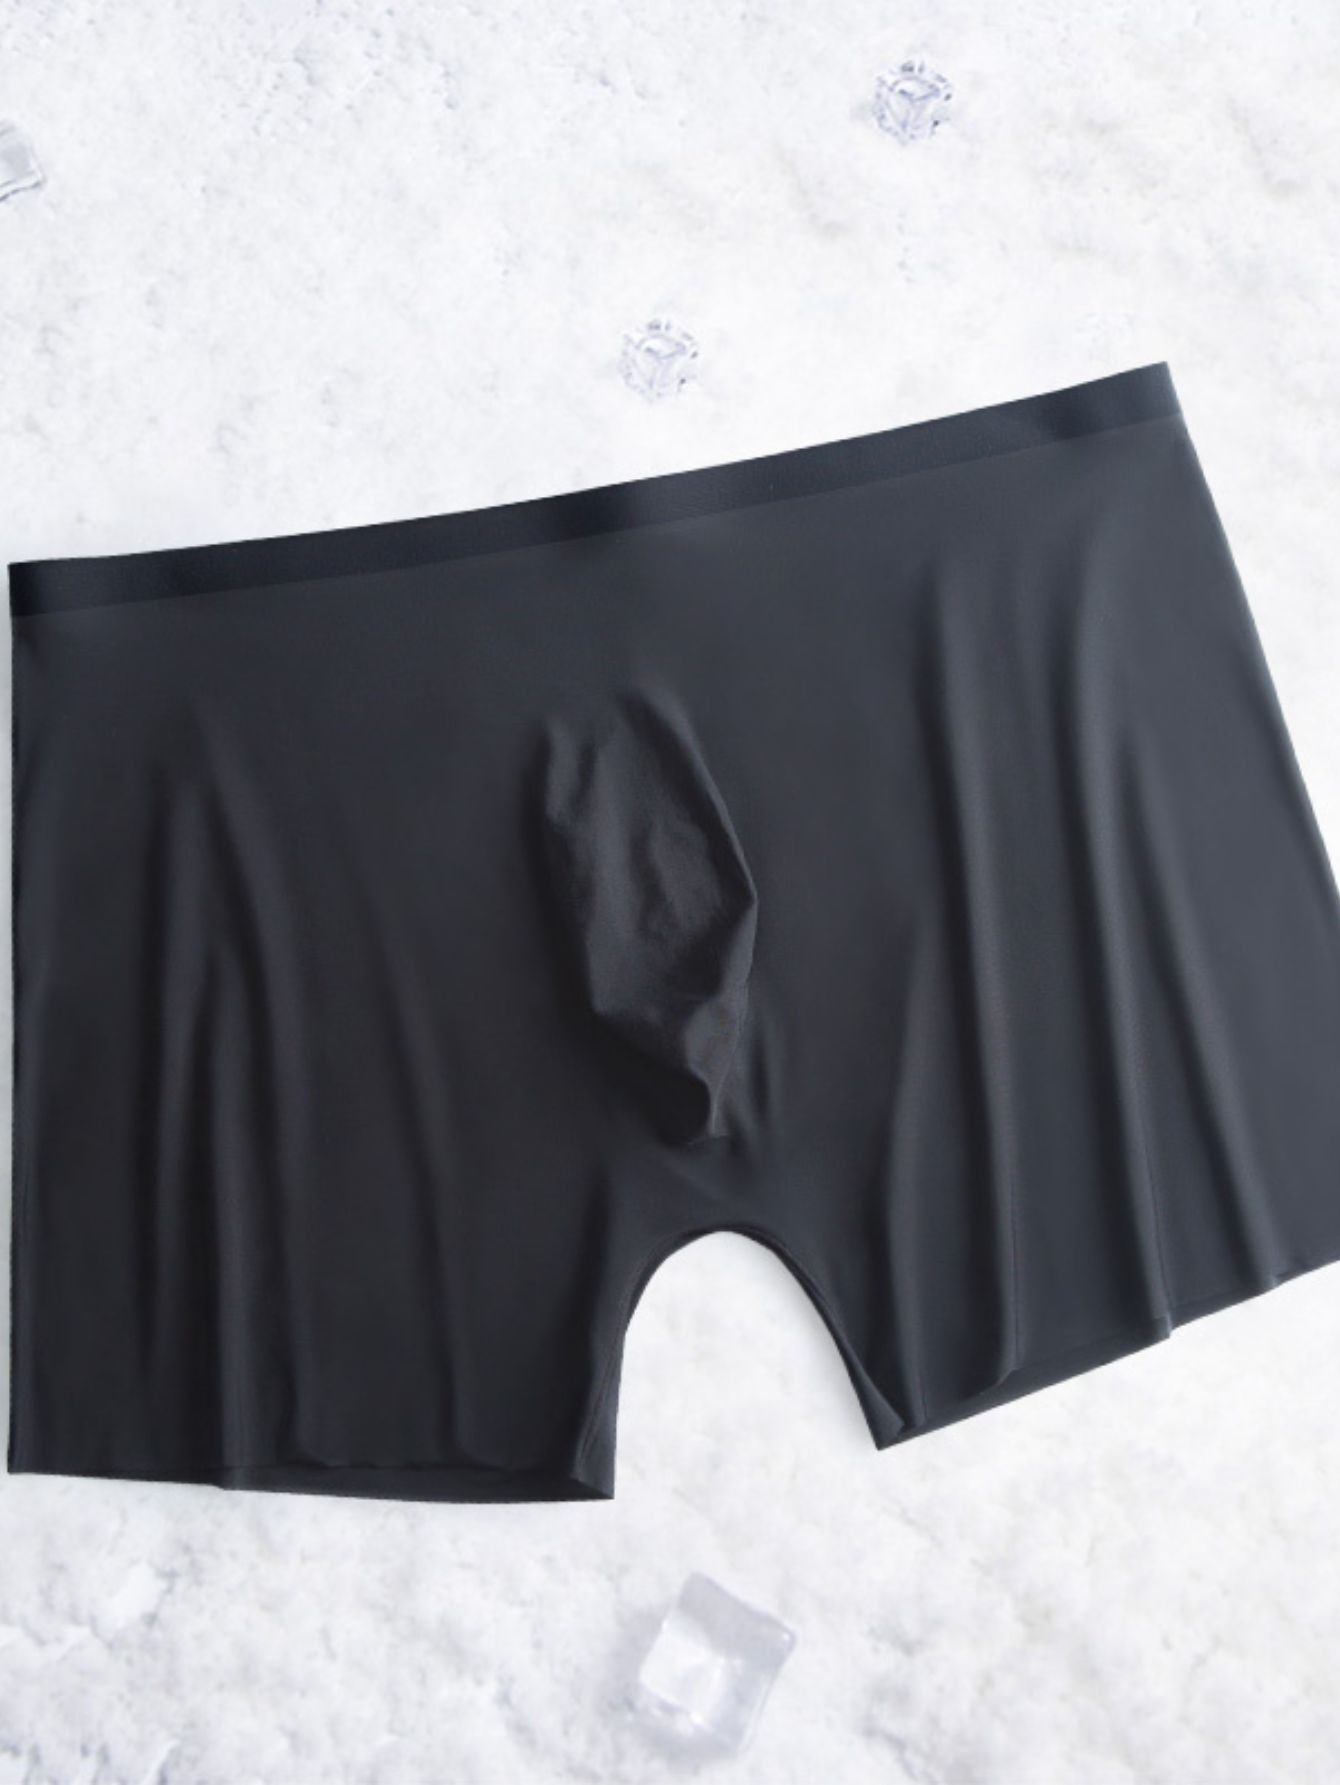 1pc Sexy Ice Silk Panties Women Girl Underwear Transparent Briefs